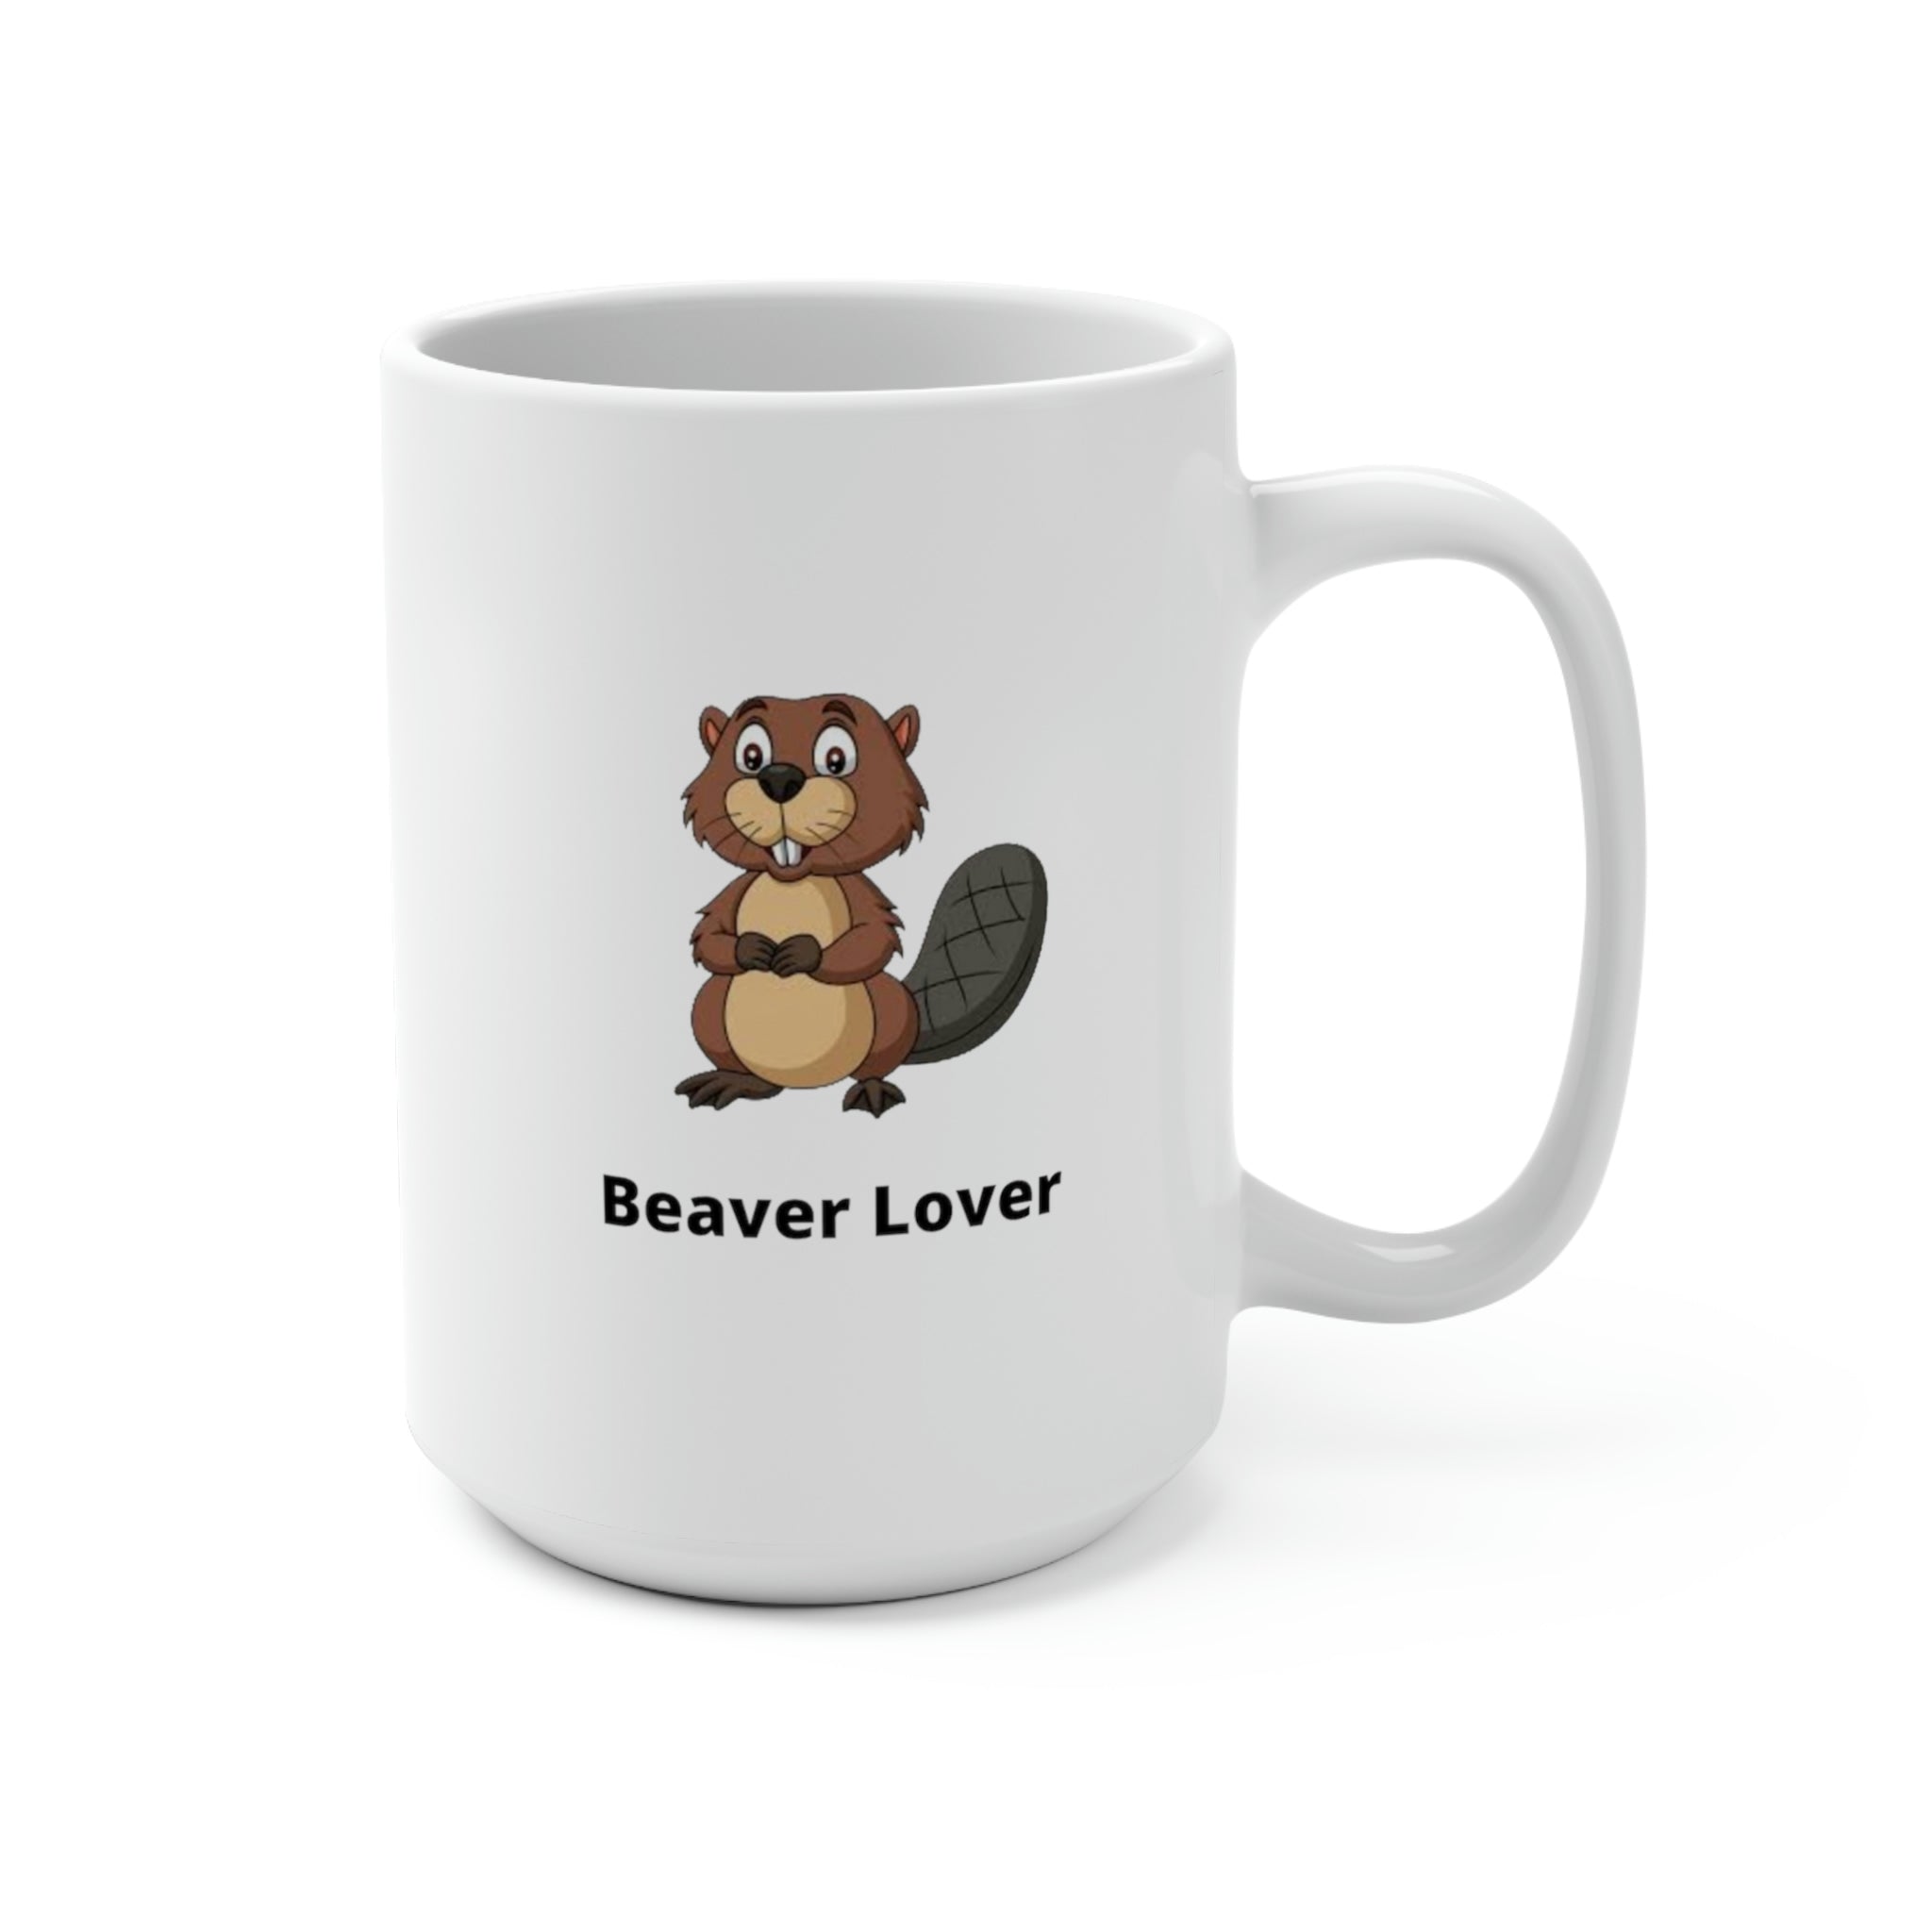 BEAVER LOVER - Novelty Coffee Mug - 15oz